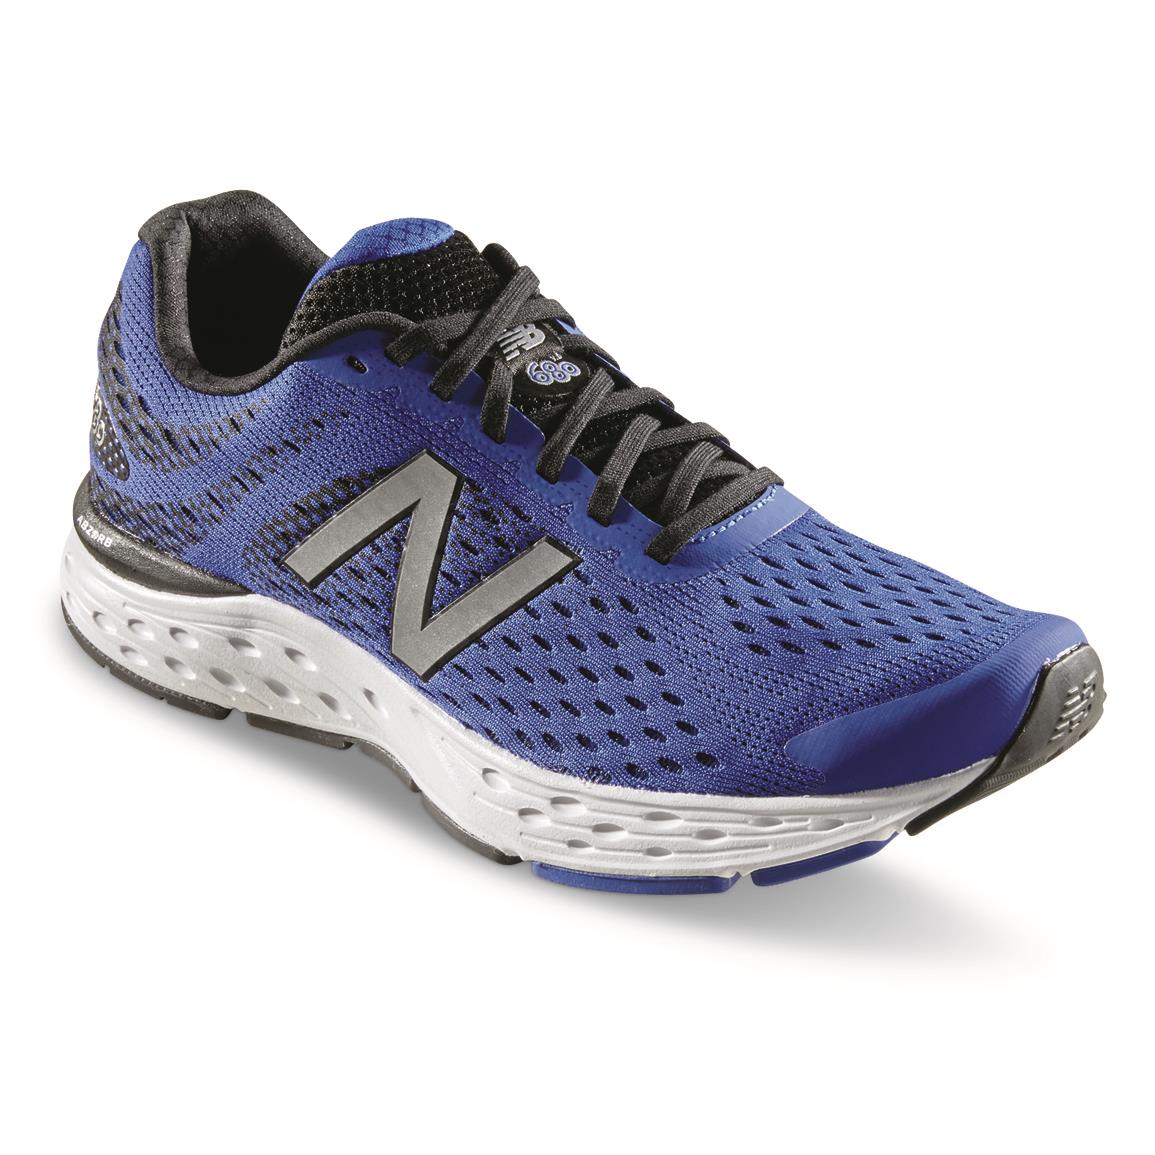 New Balance Men's 680v6 Running Shoes - 707765, Running Shoes ...